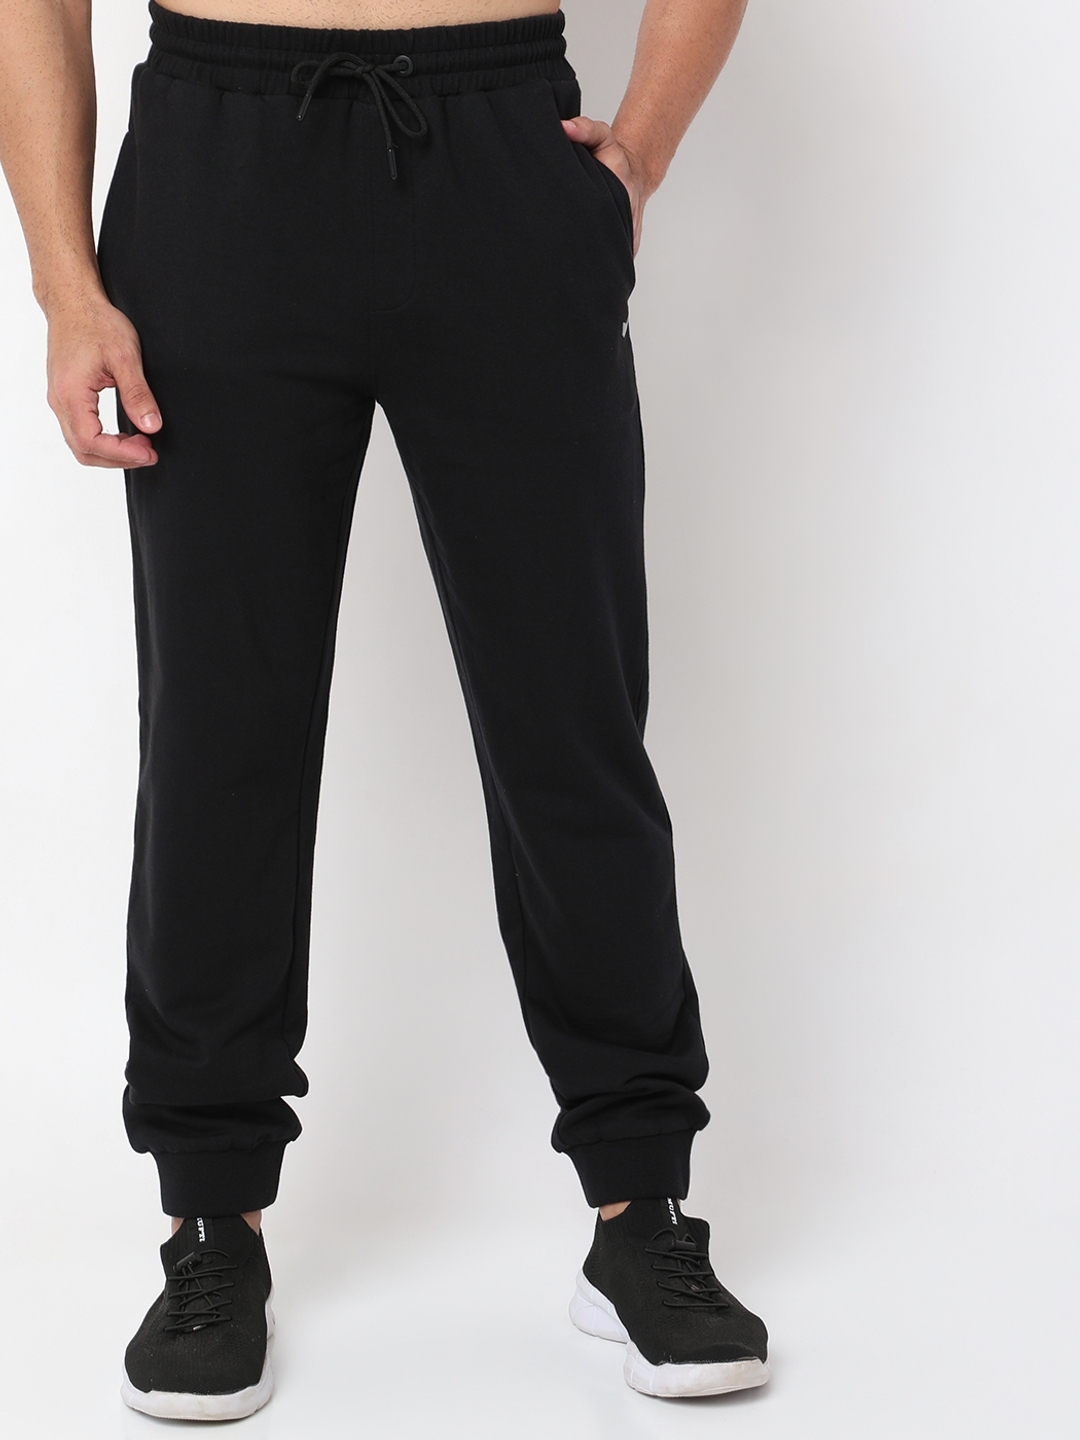 Buy Black Track Pants for Men by PERFORMAX Online | Ajio.com